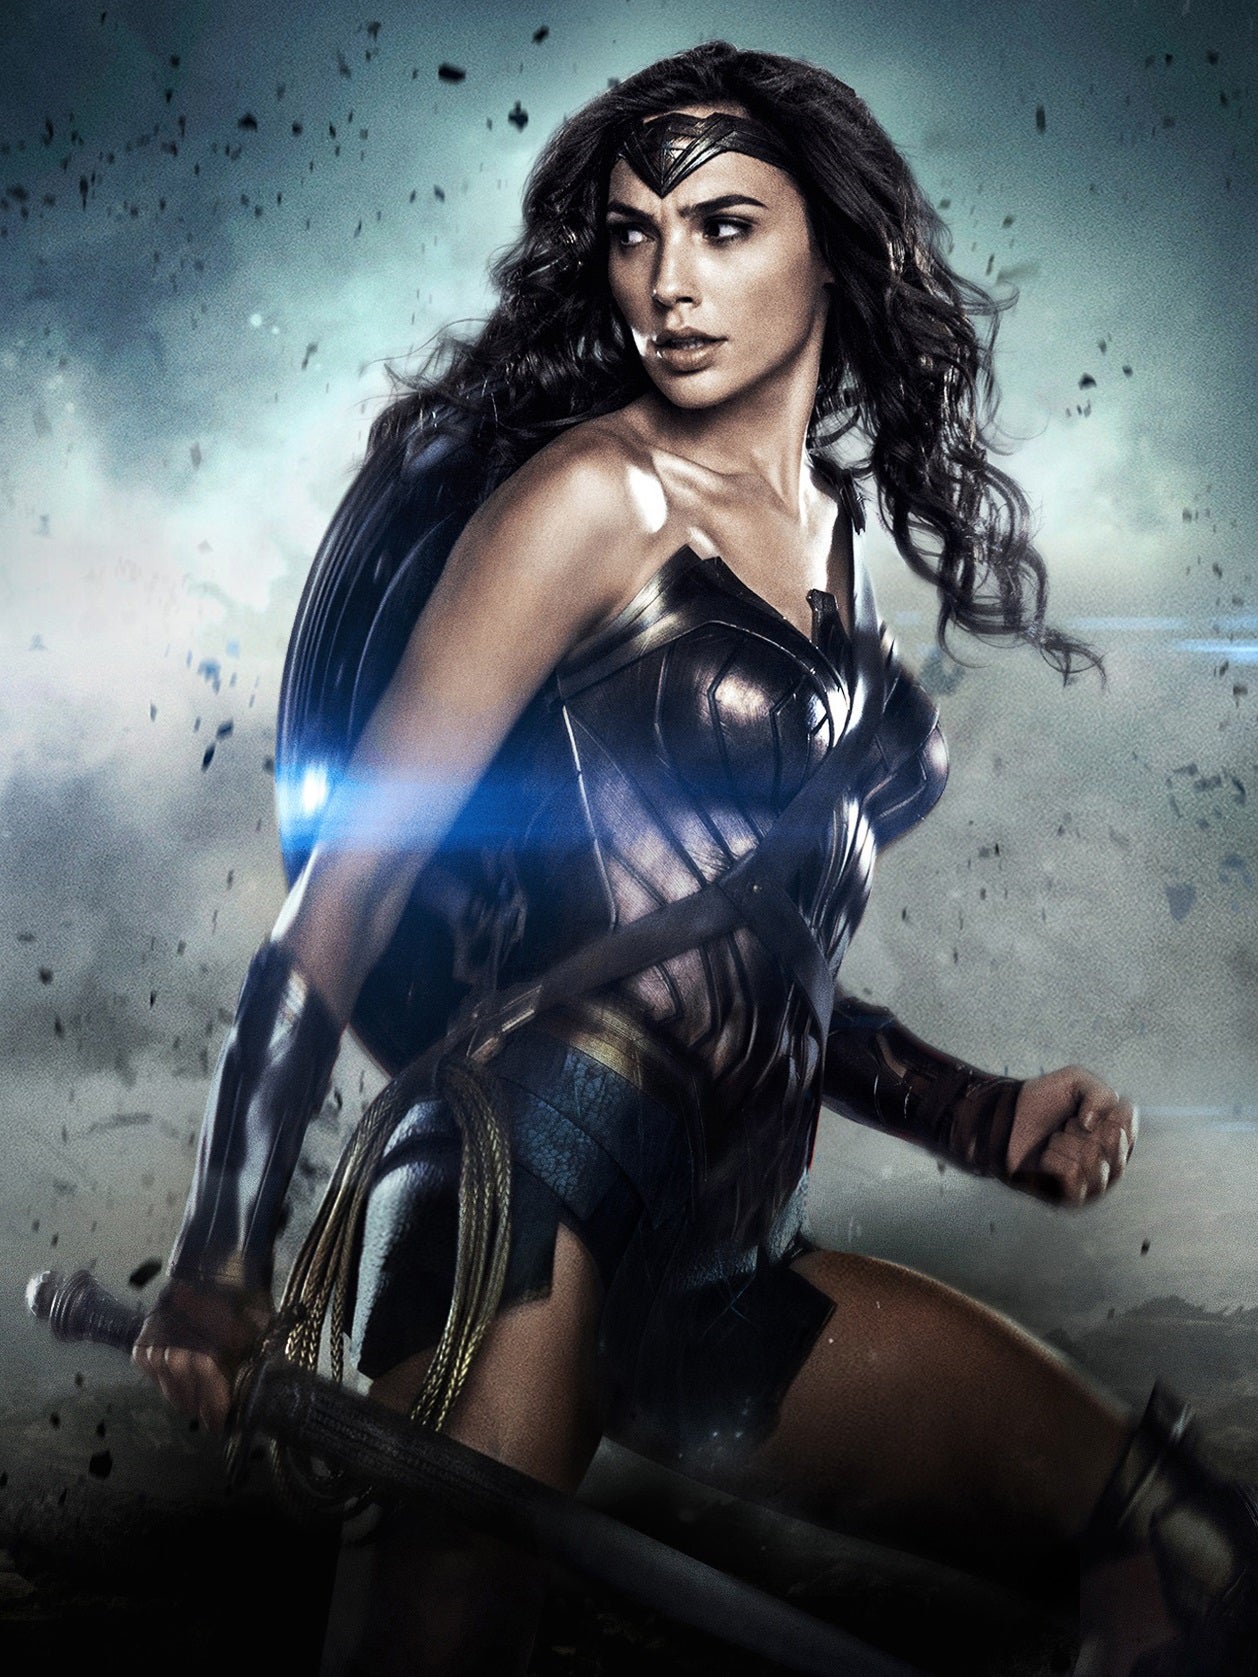 Wonder Woman's Gal Gadot Israel Views and Black Feminism - Essence